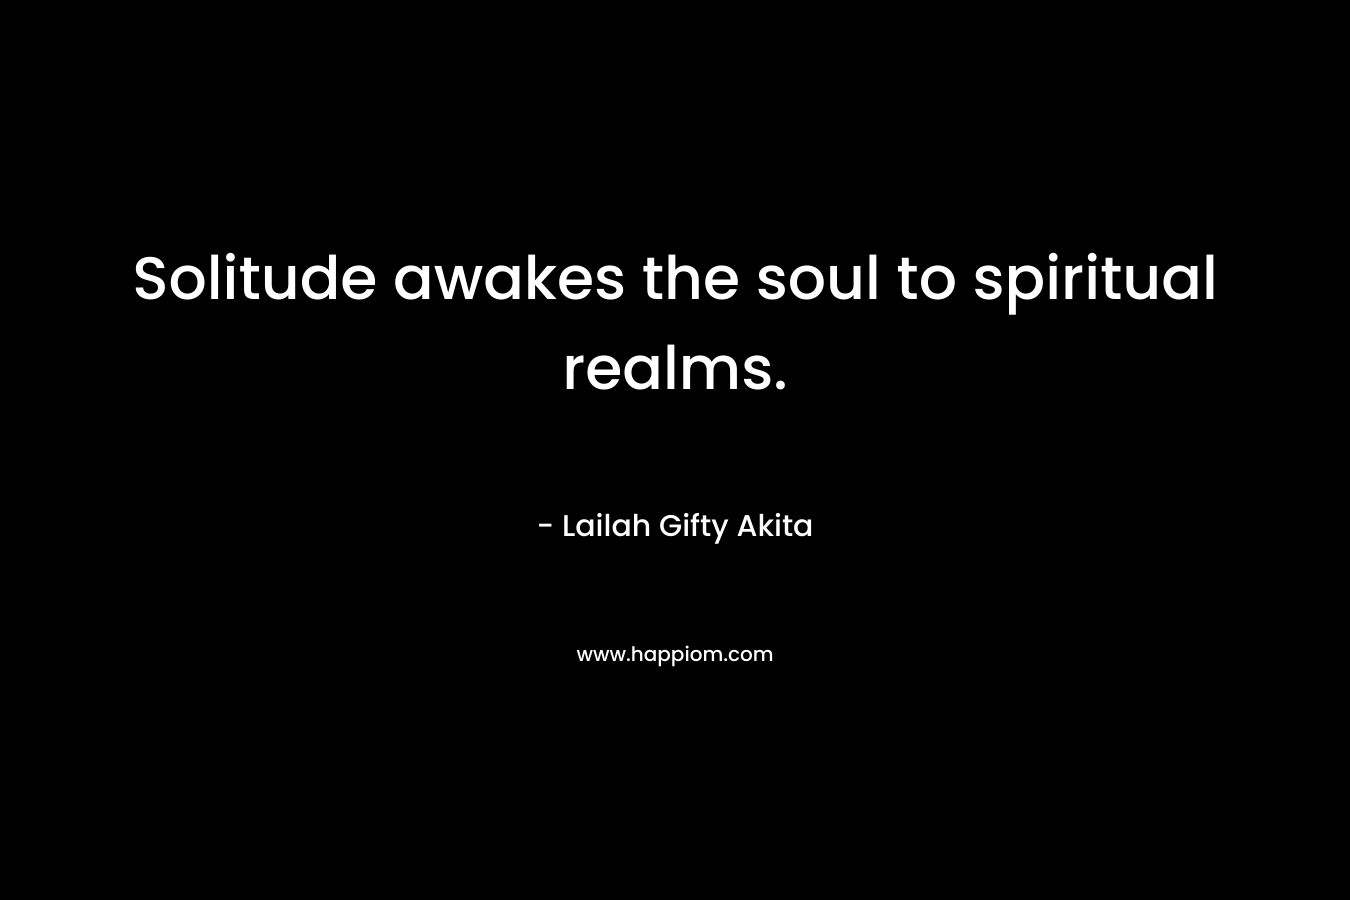 Solitude awakes the soul to spiritual realms. – Lailah Gifty Akita